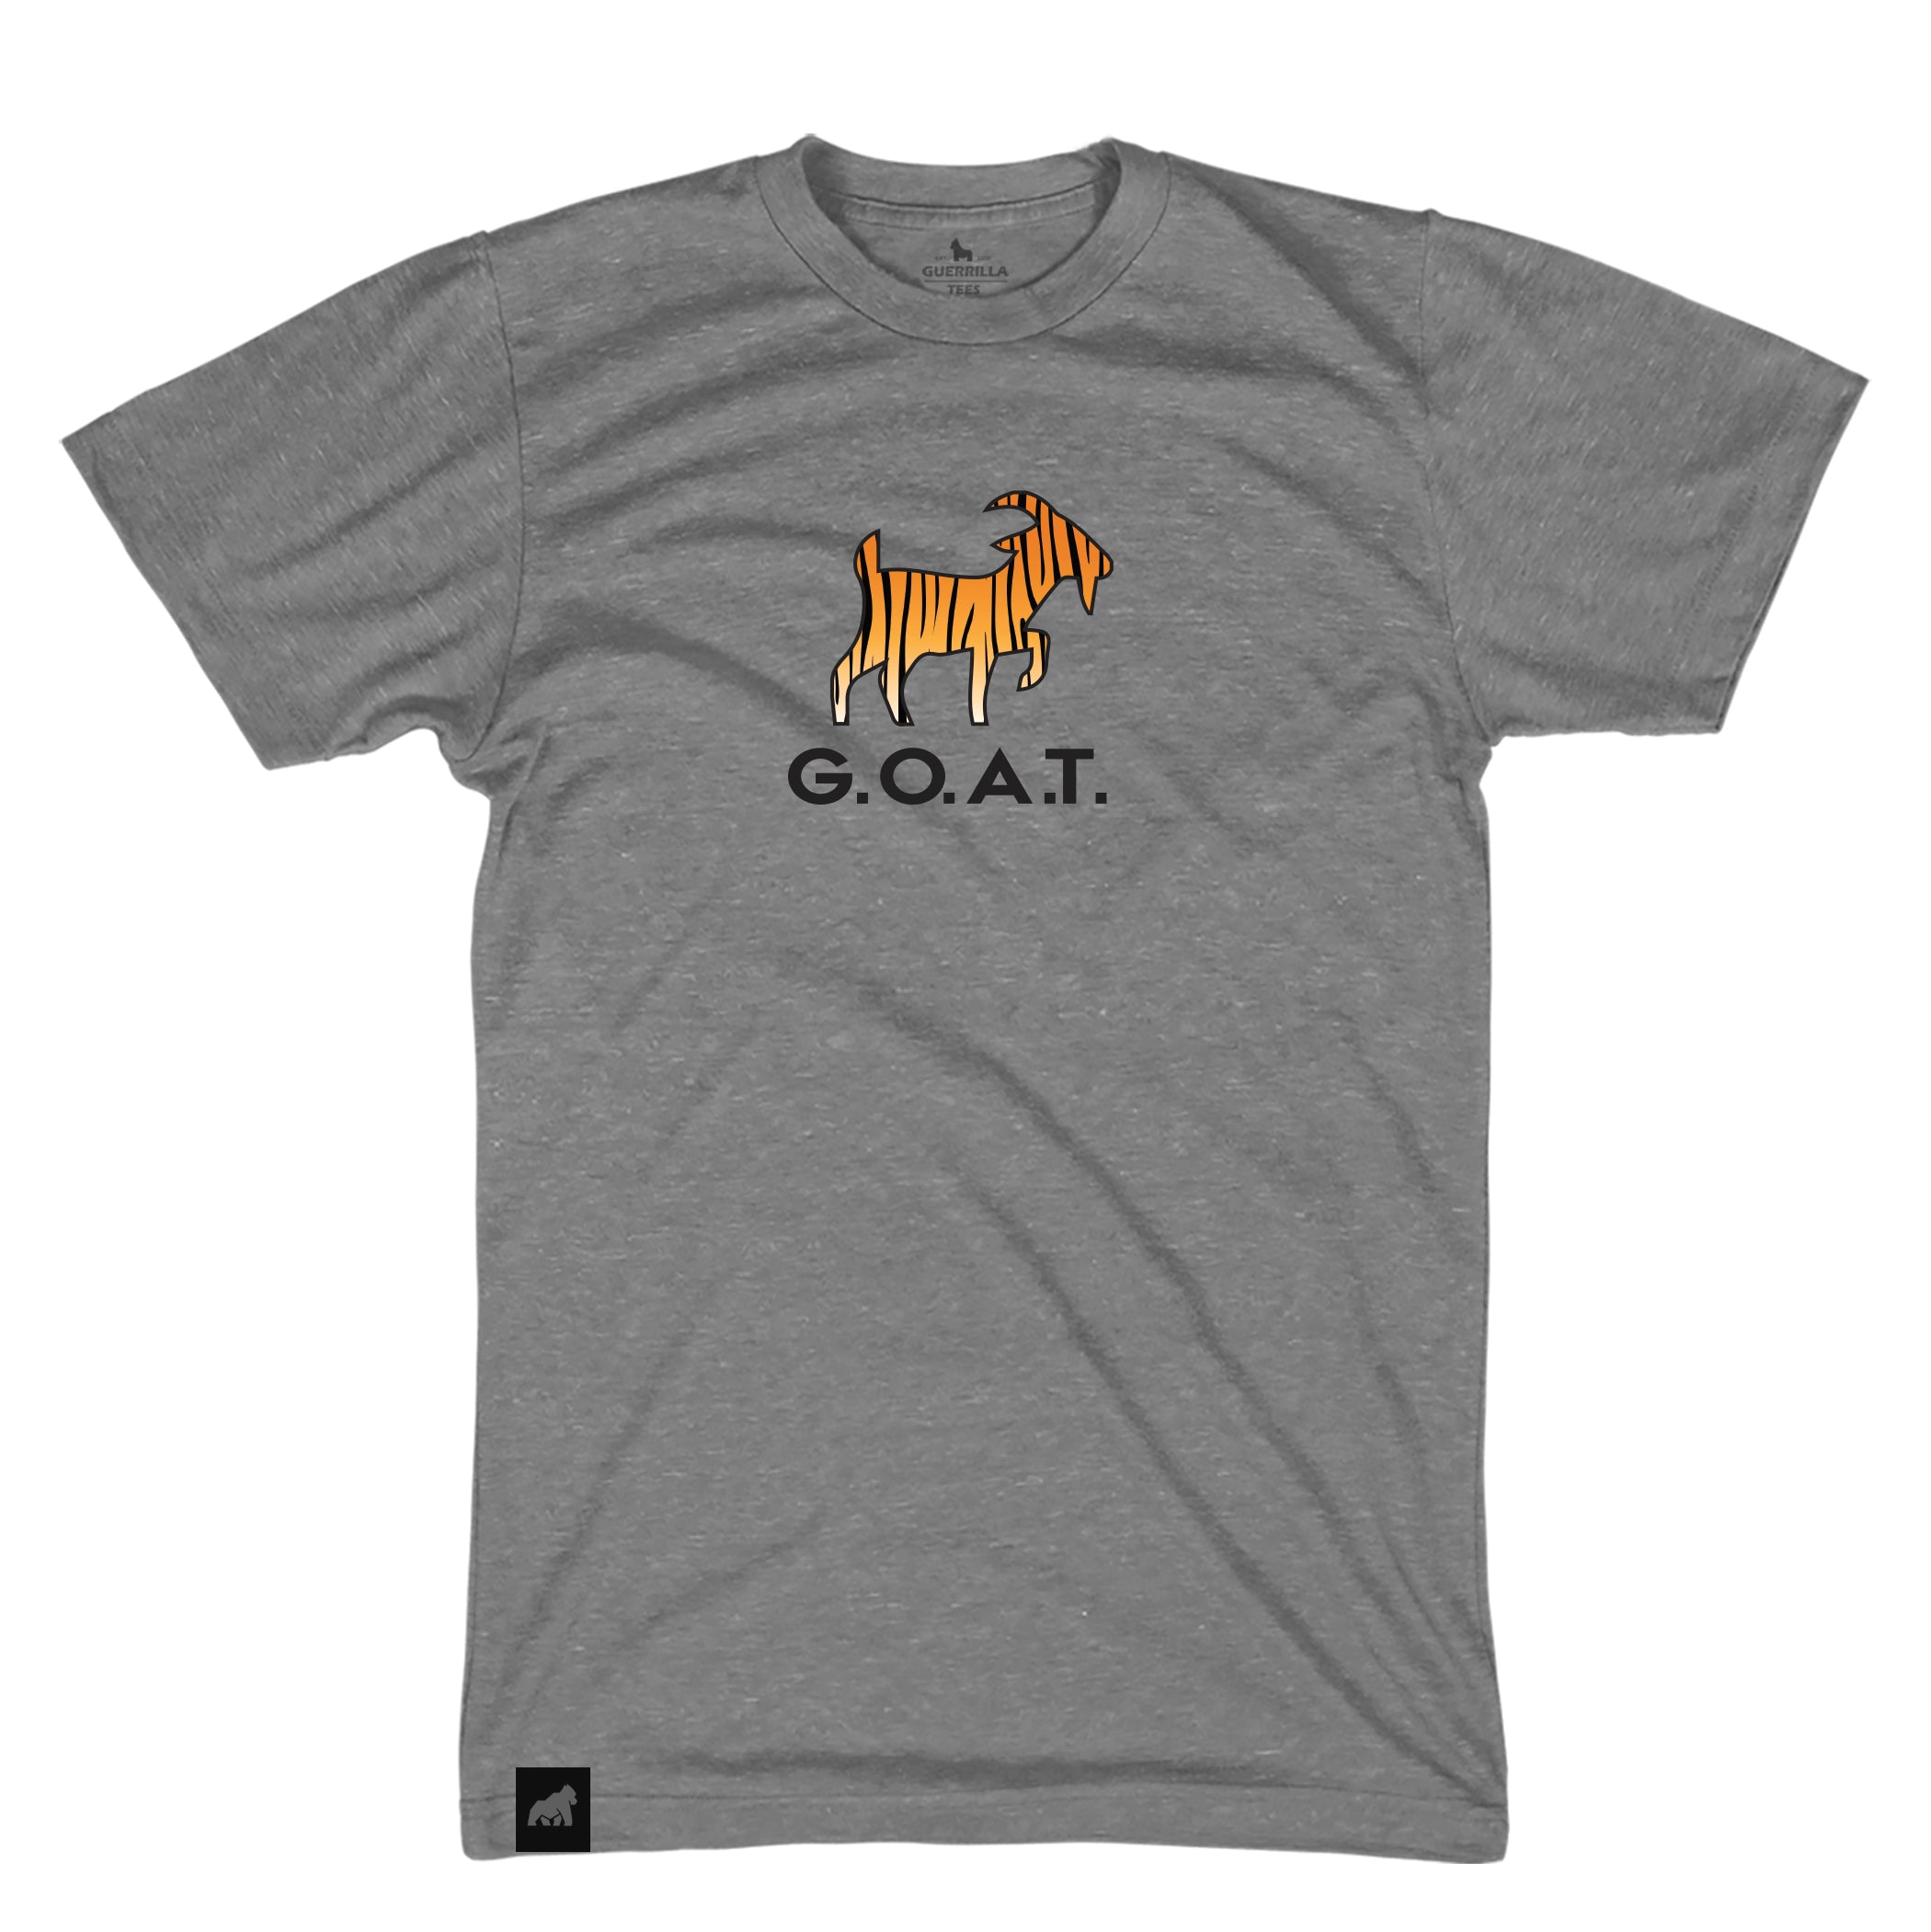 Tiger "Goat" T-Shirt